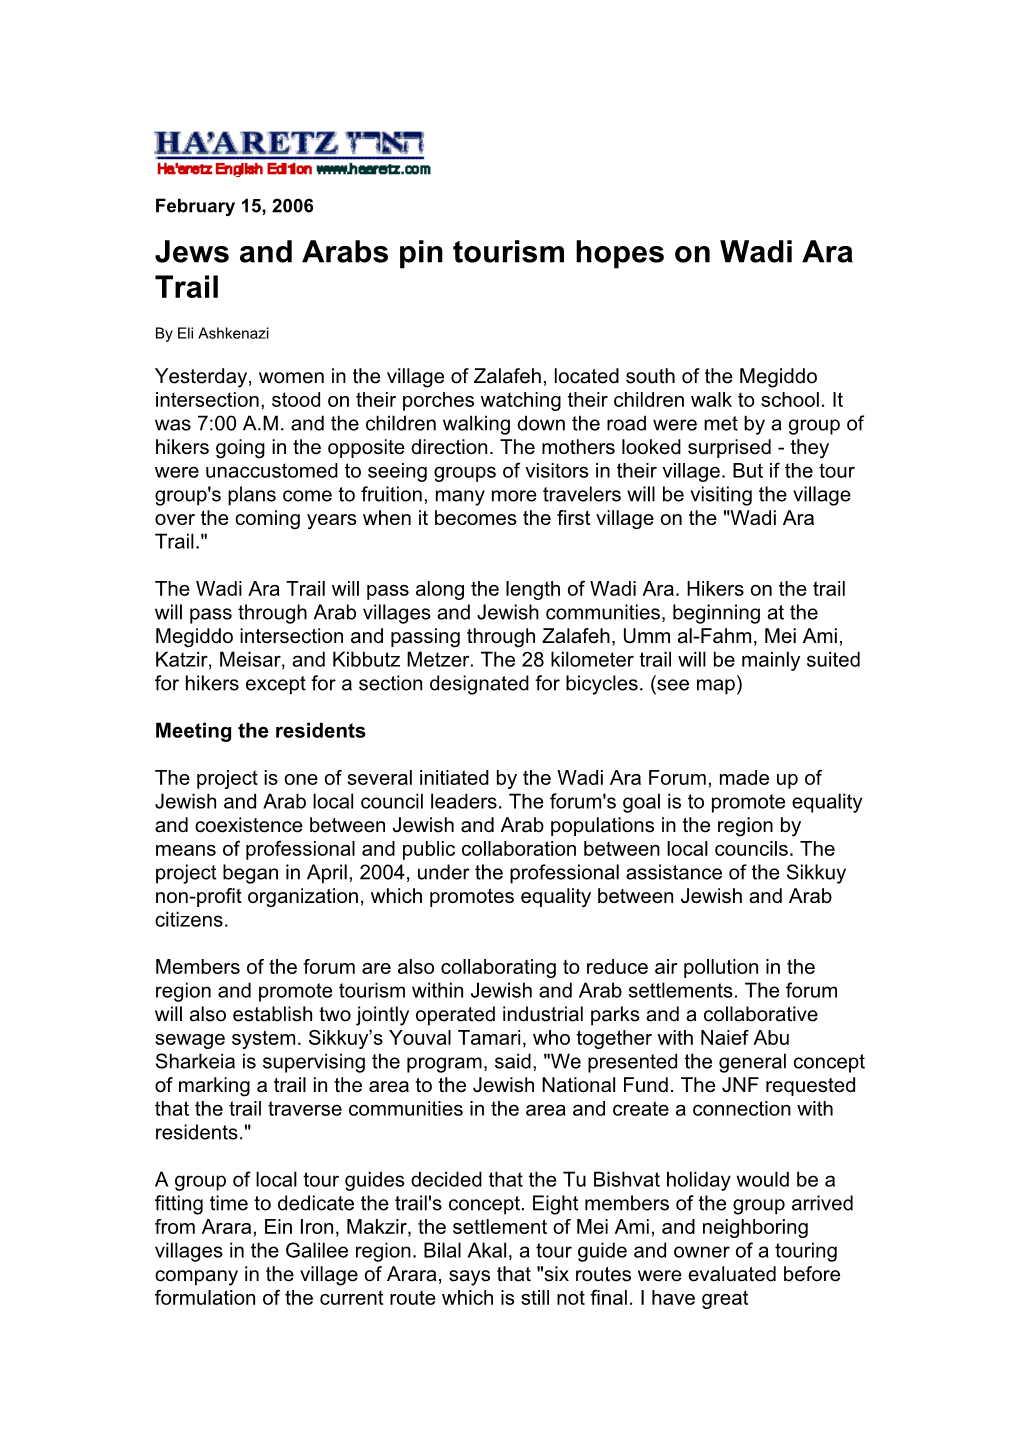 Jews and Arabs Pin Tourism Hopes on Wadi Ara Trail